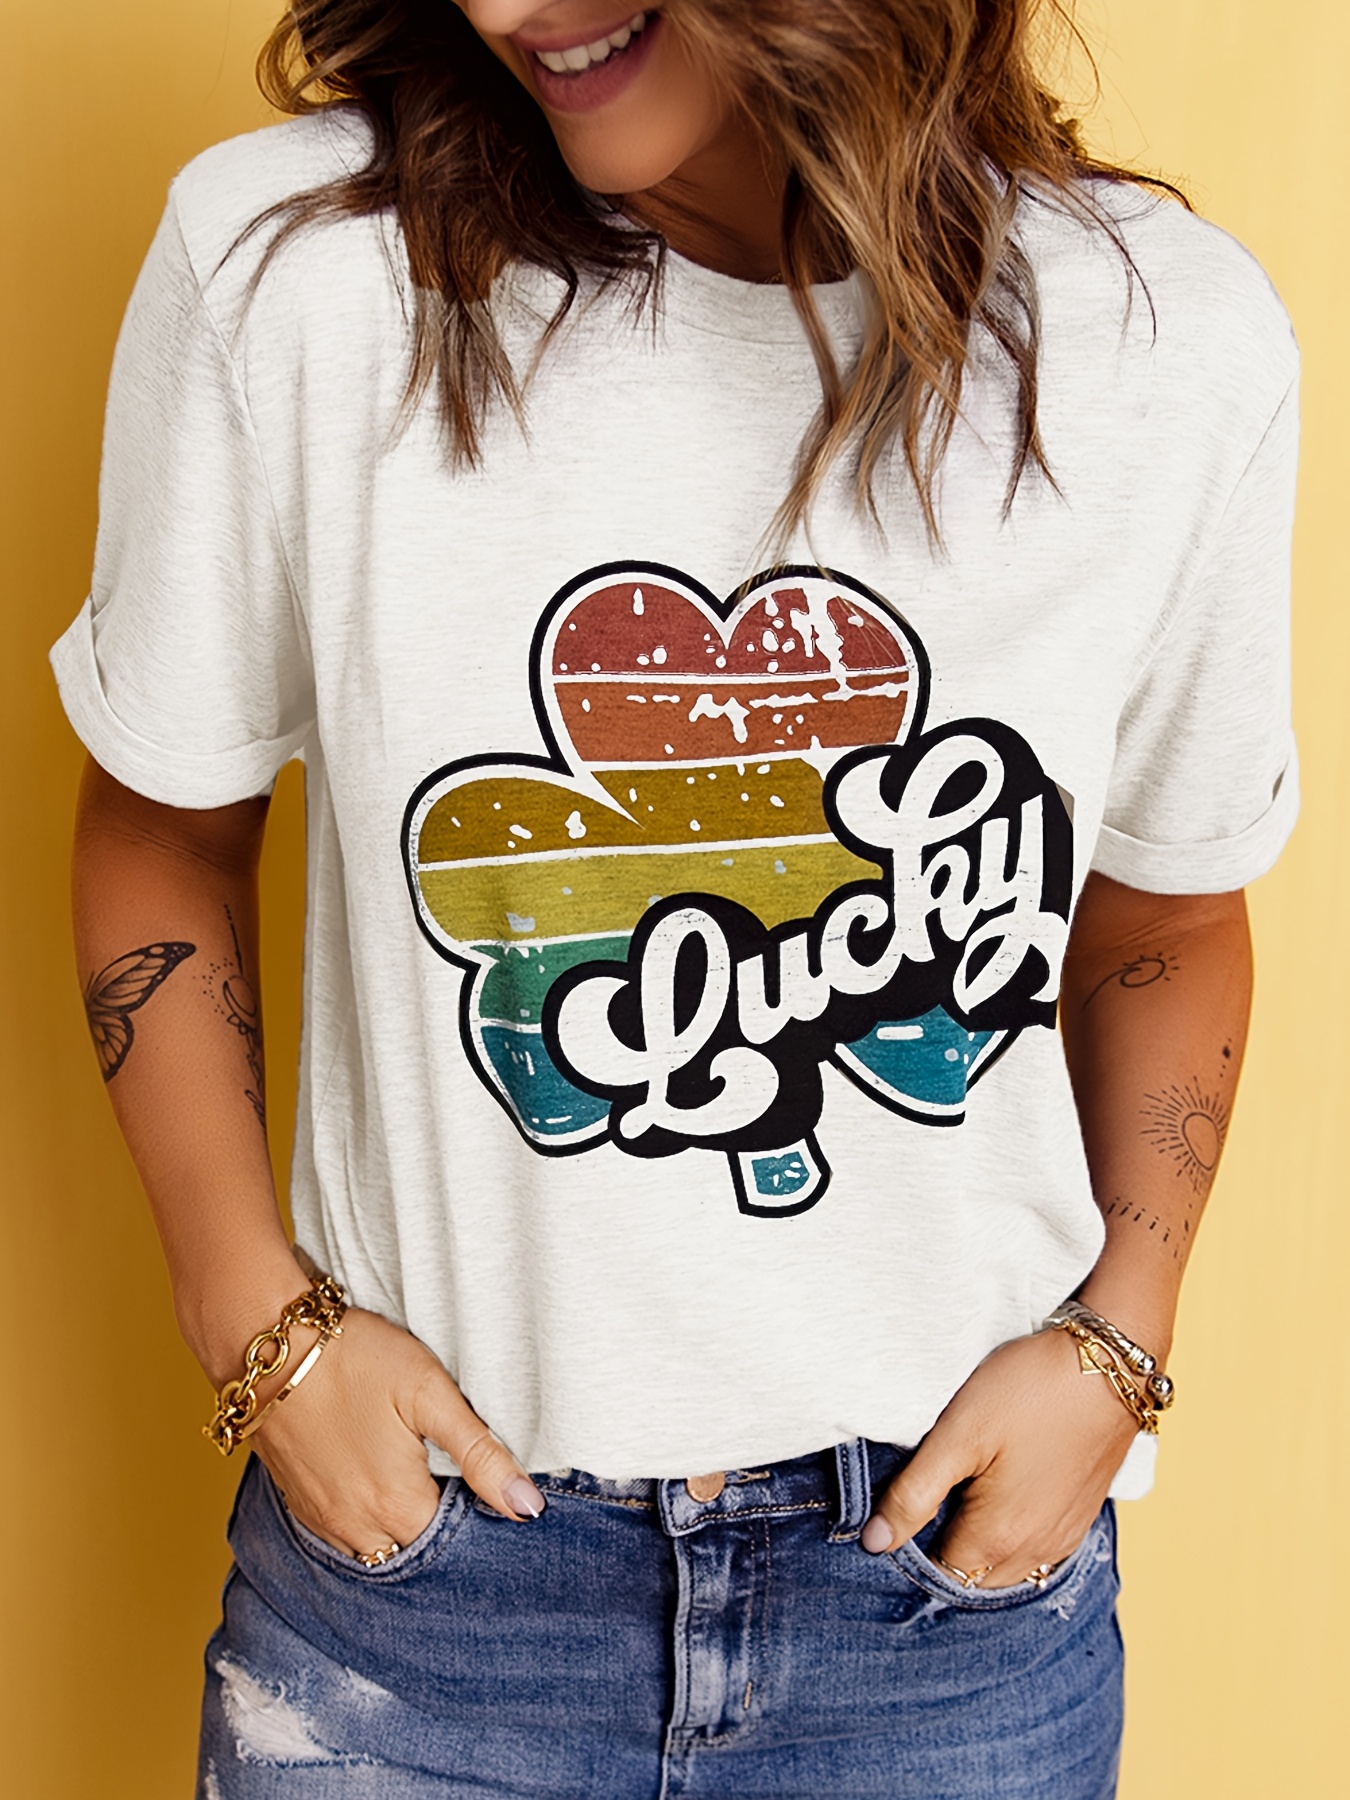 Lucky Brand Shirts & Tops for Women